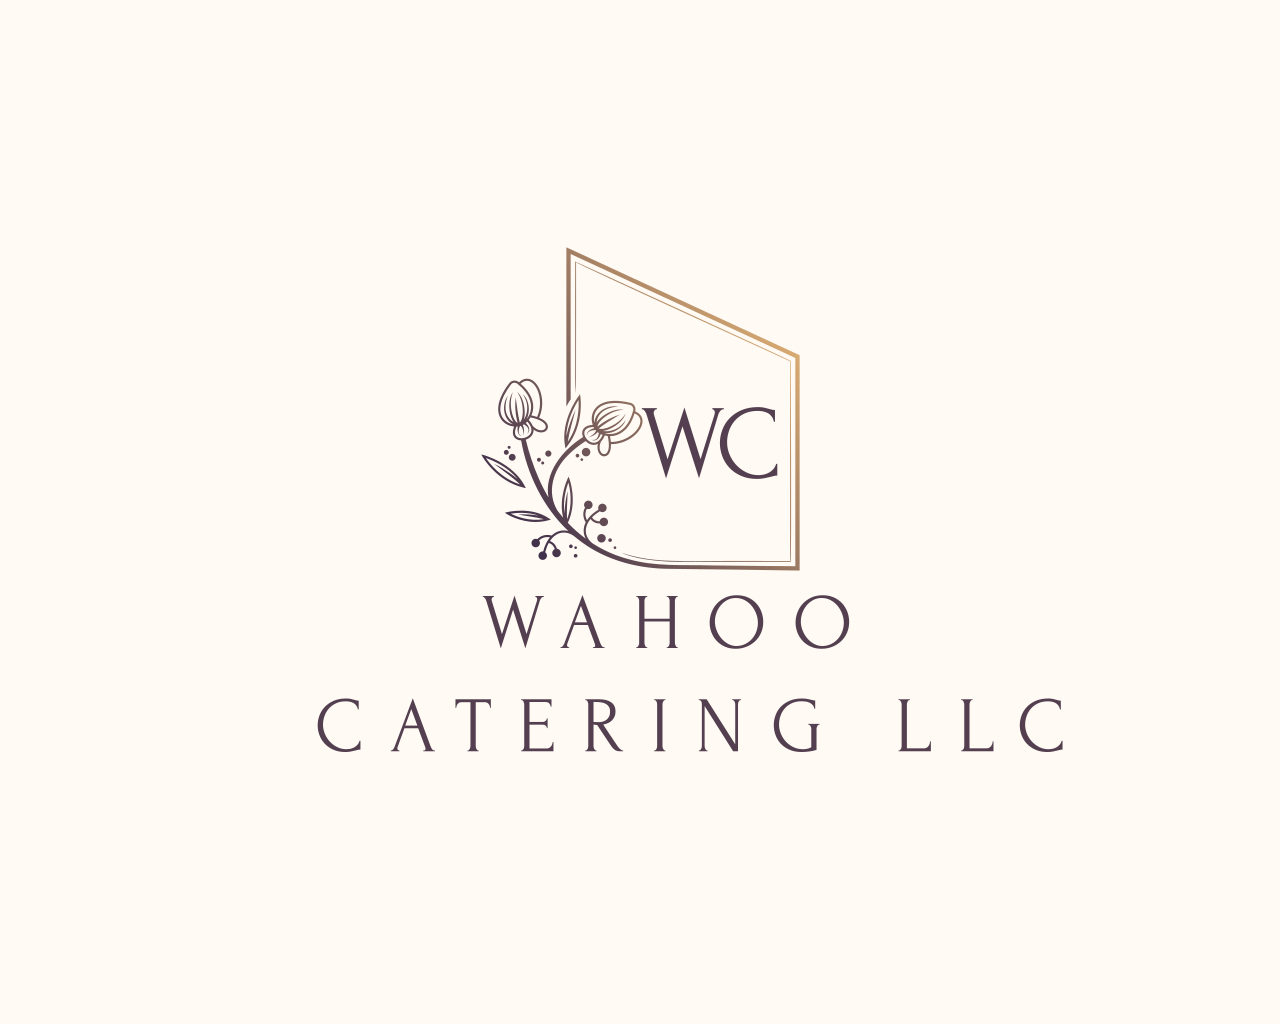 Wahoo Catering LLC